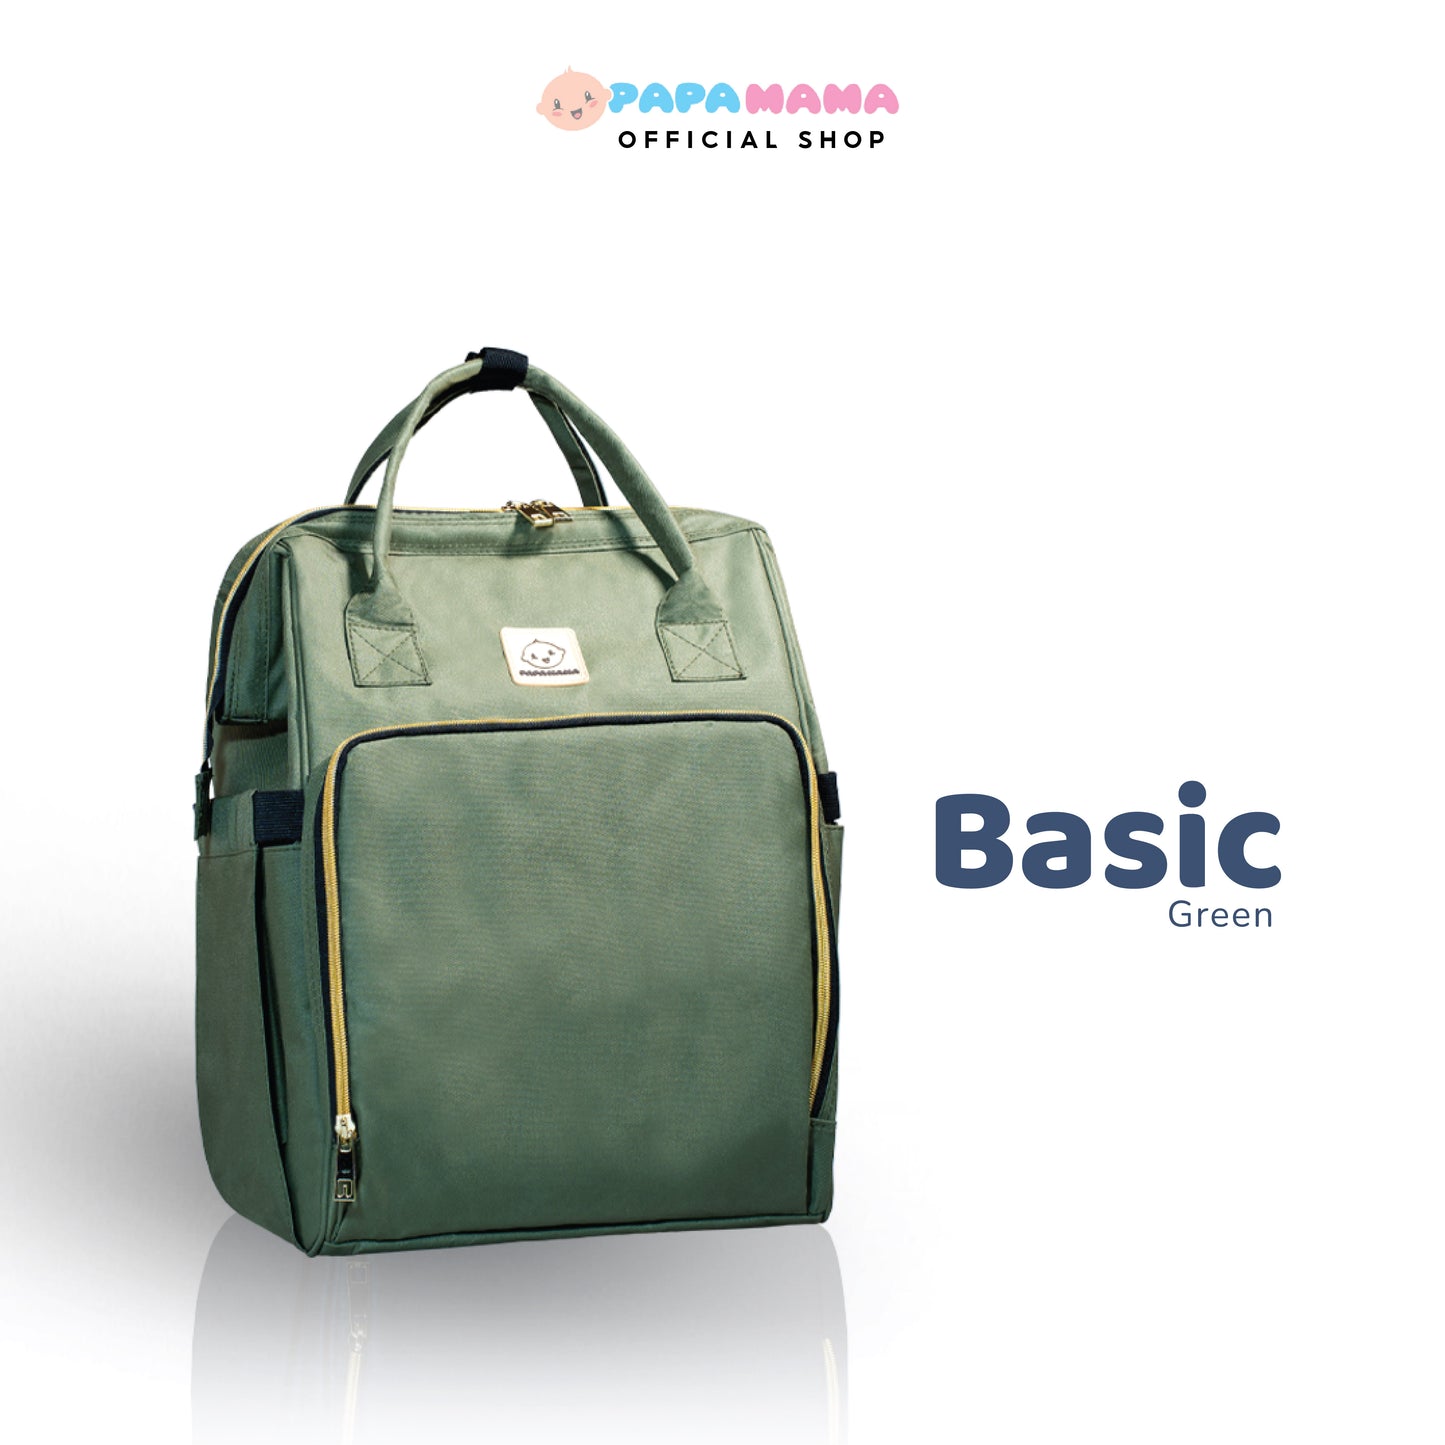 Papamama Basic Diaper Bag - 1003